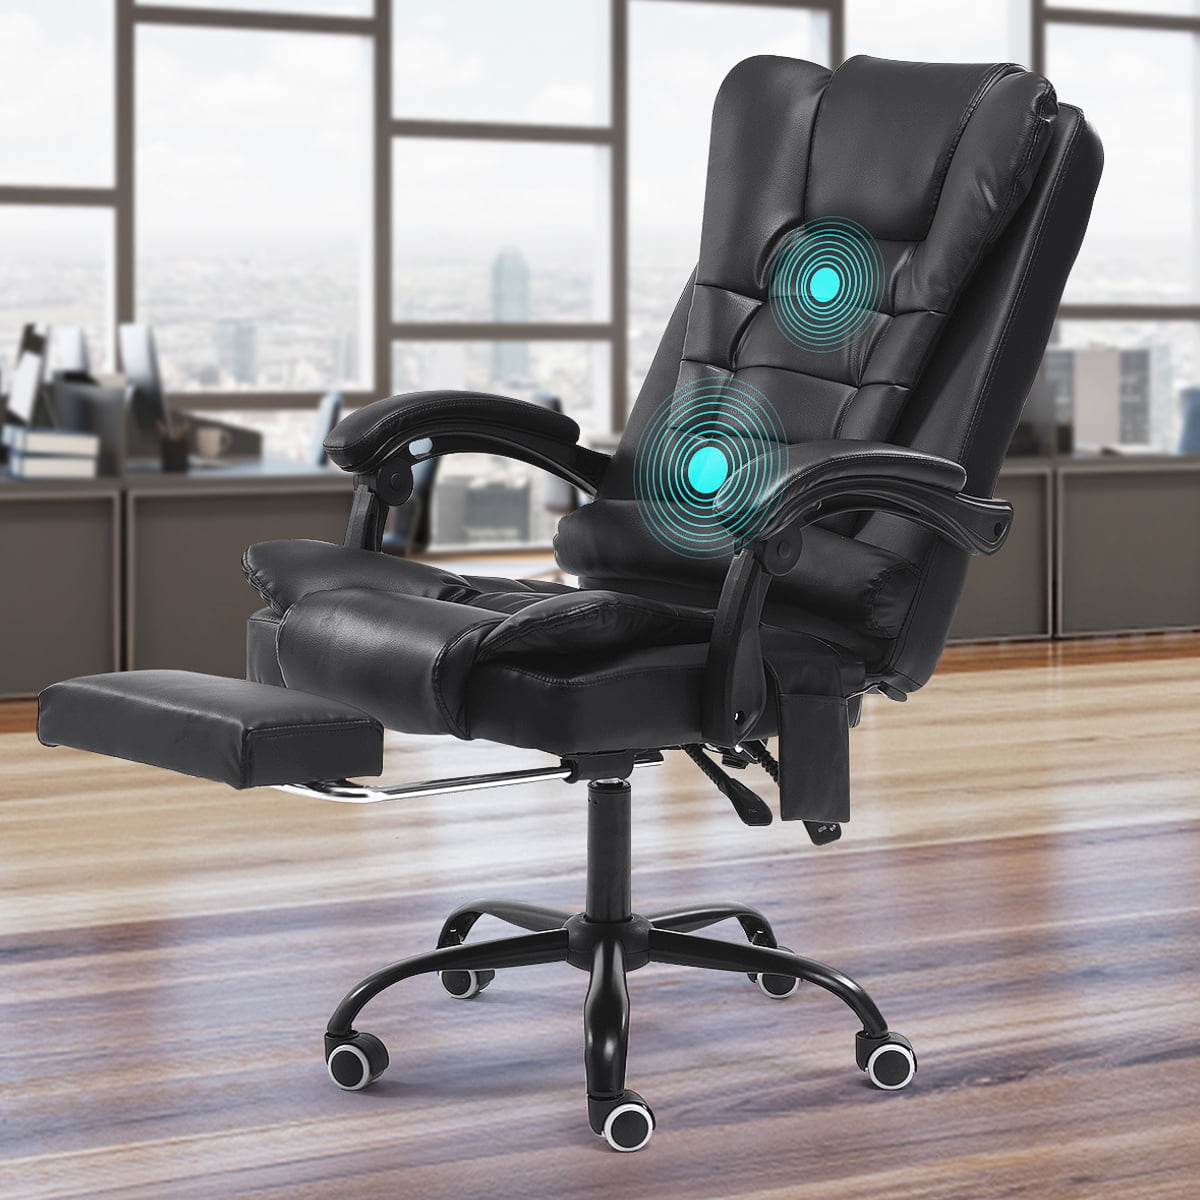 MELLCOM Executive 3D Massage Chair with Lumbar Support High Back